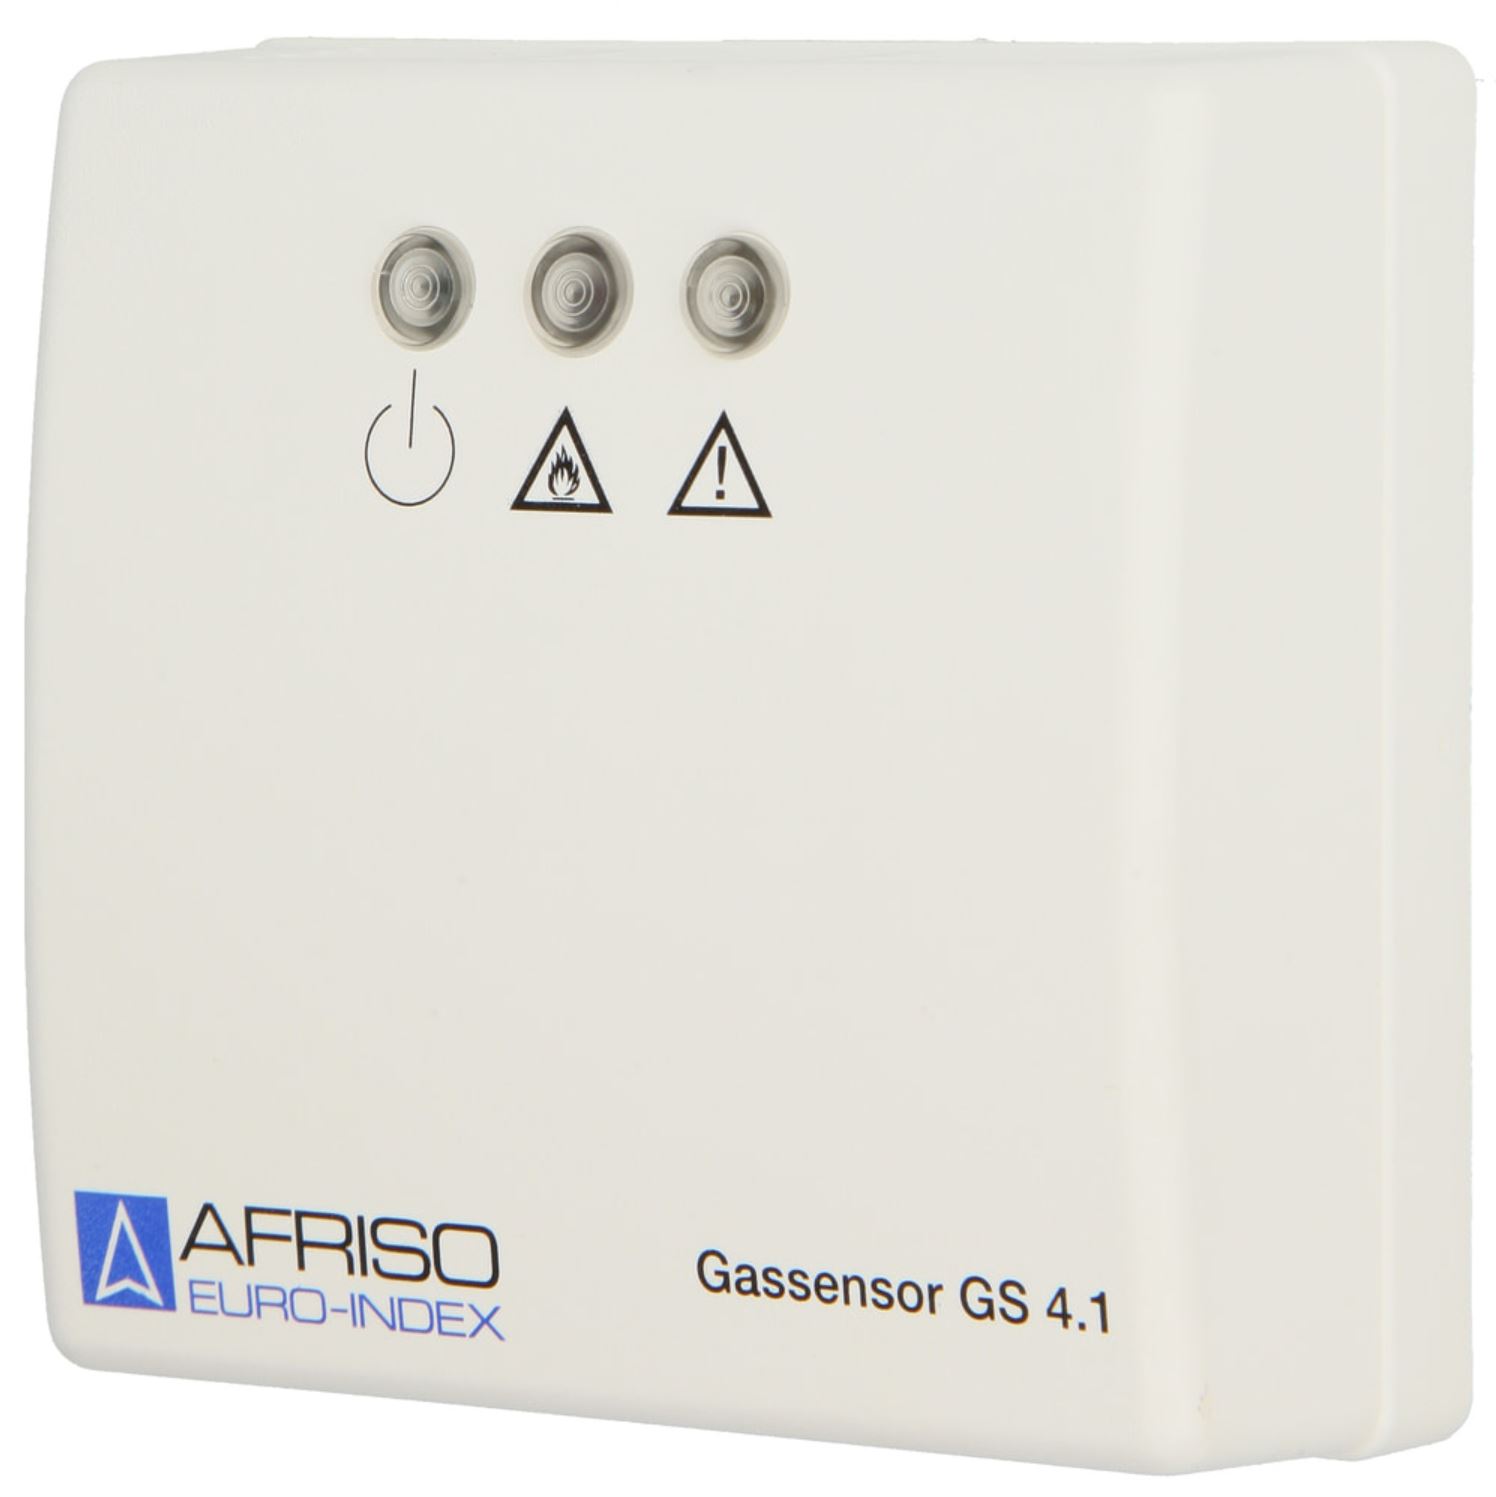 Gassensor Afriso GS 4.1 Propan/Butan für Gas- u. Rauchmelder - 61189